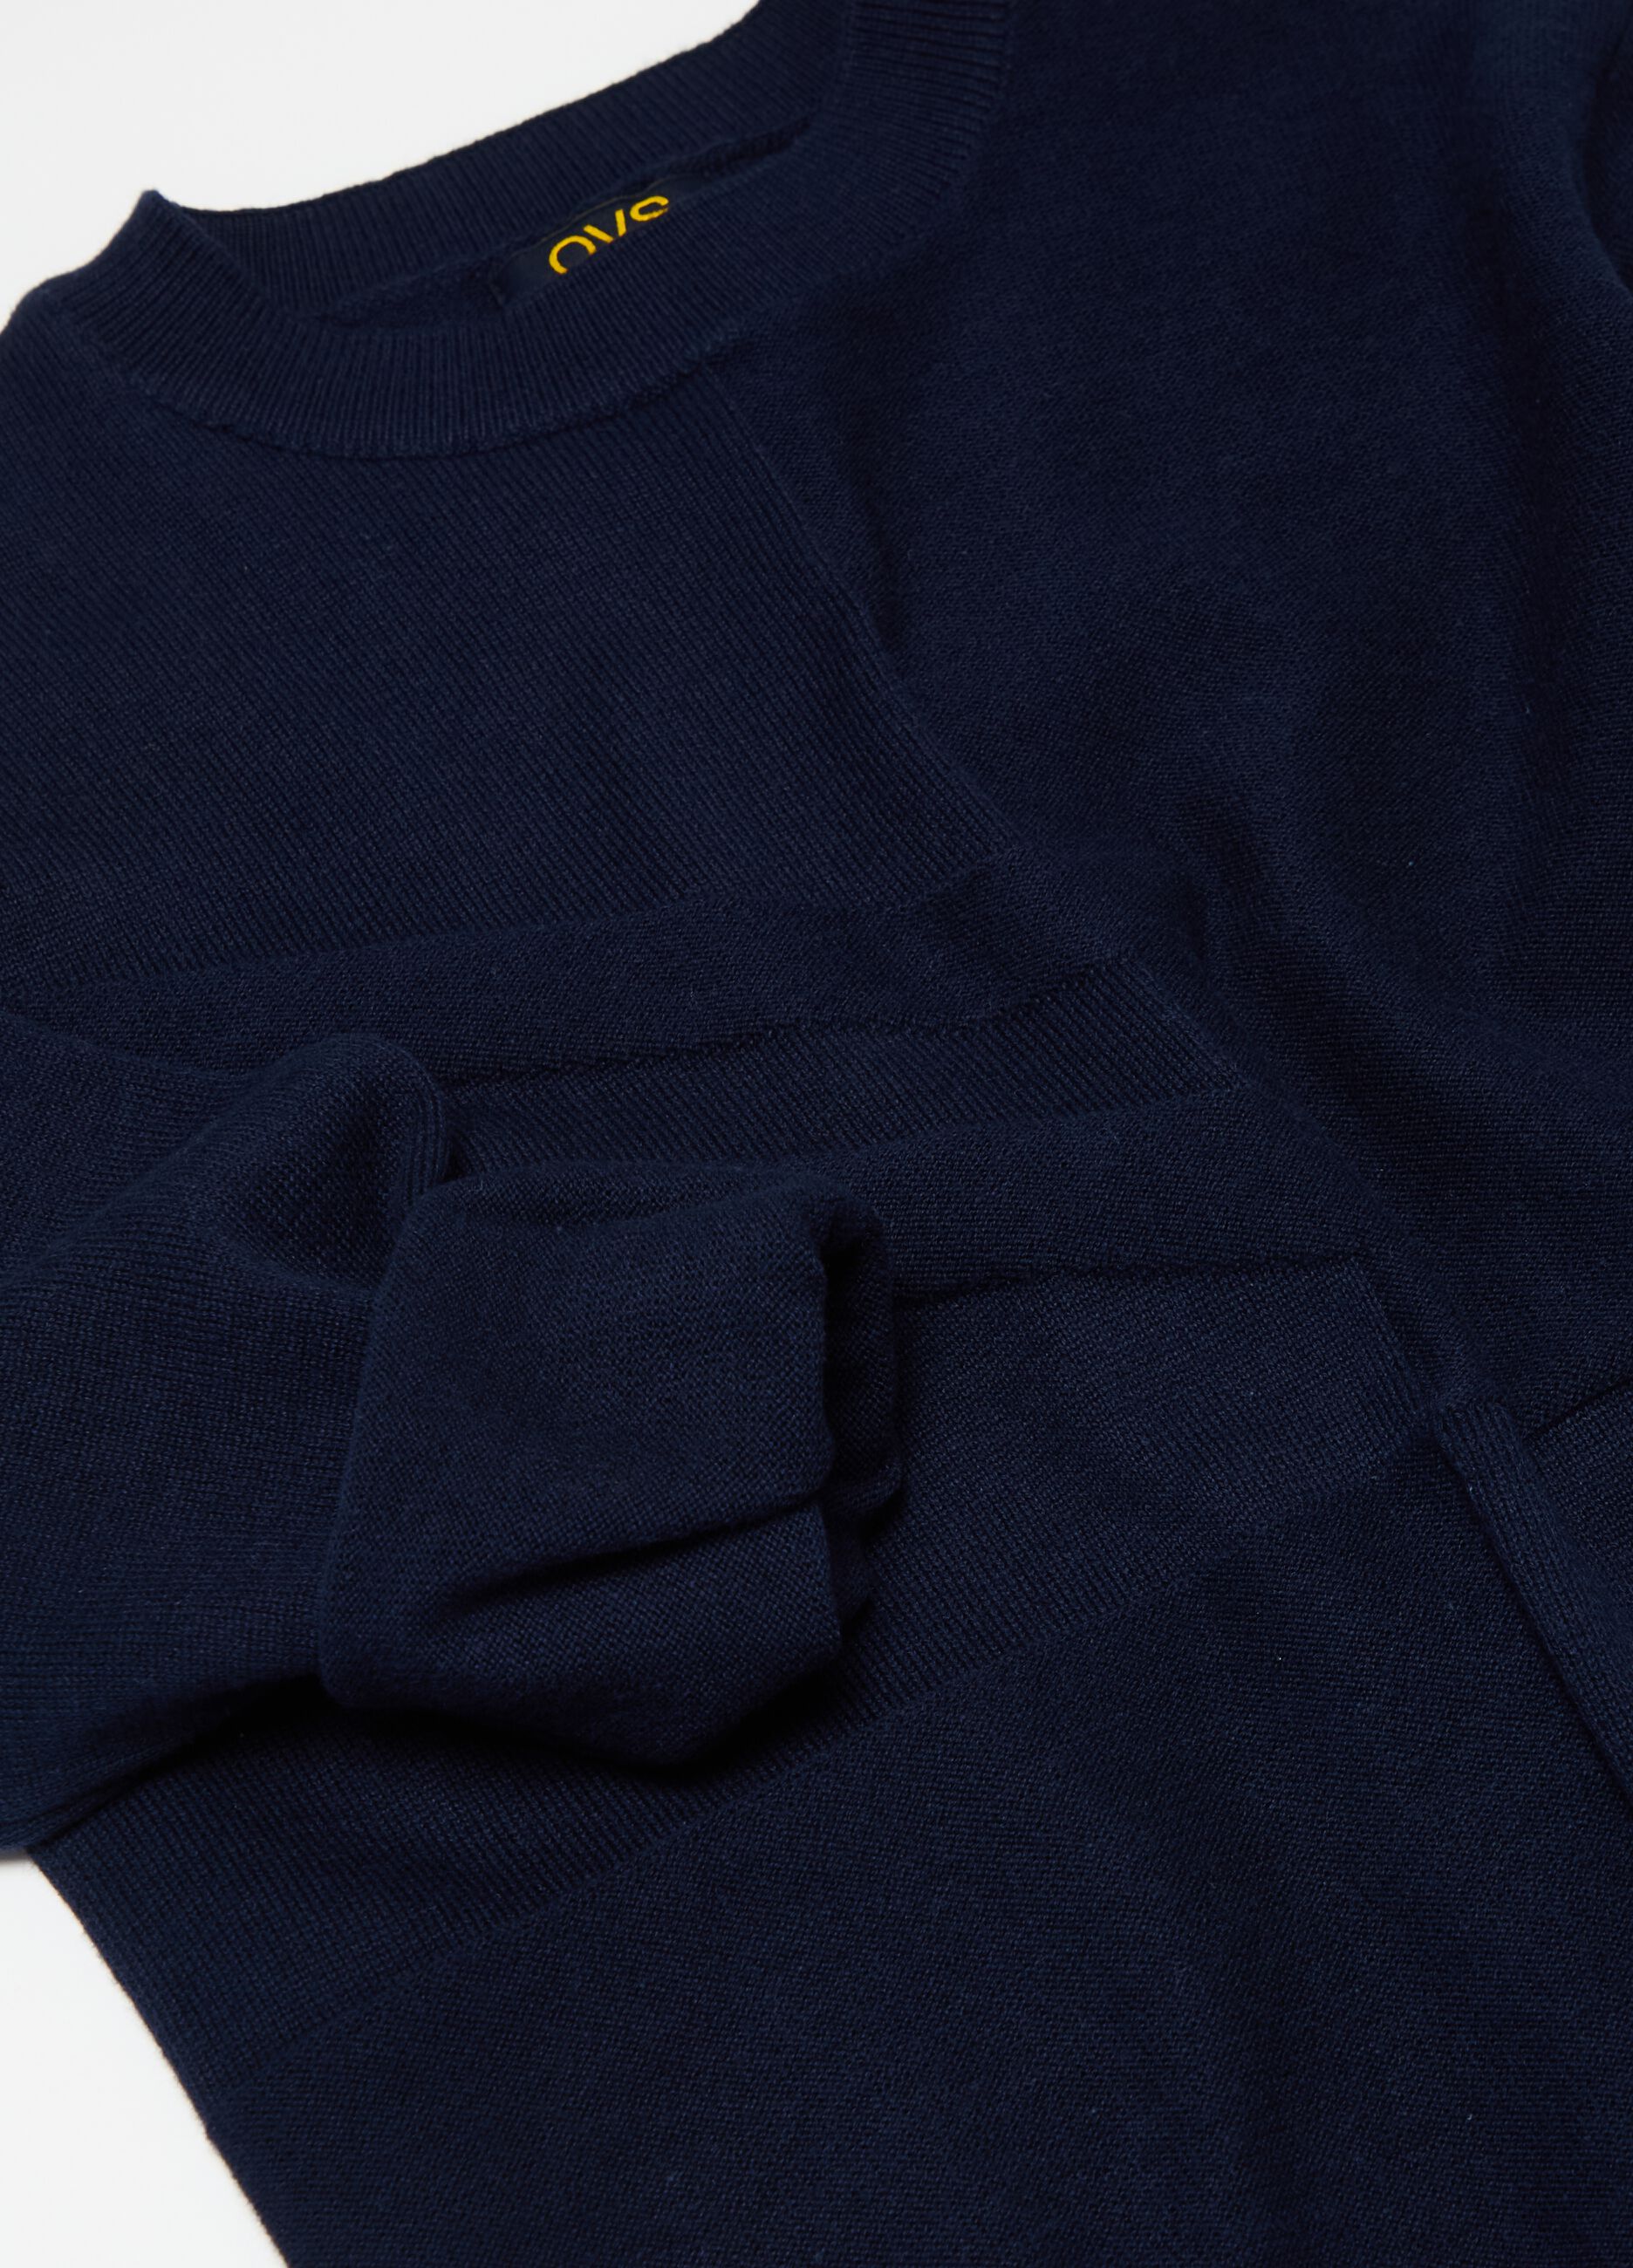 Jersey de algodón con detalles a juego